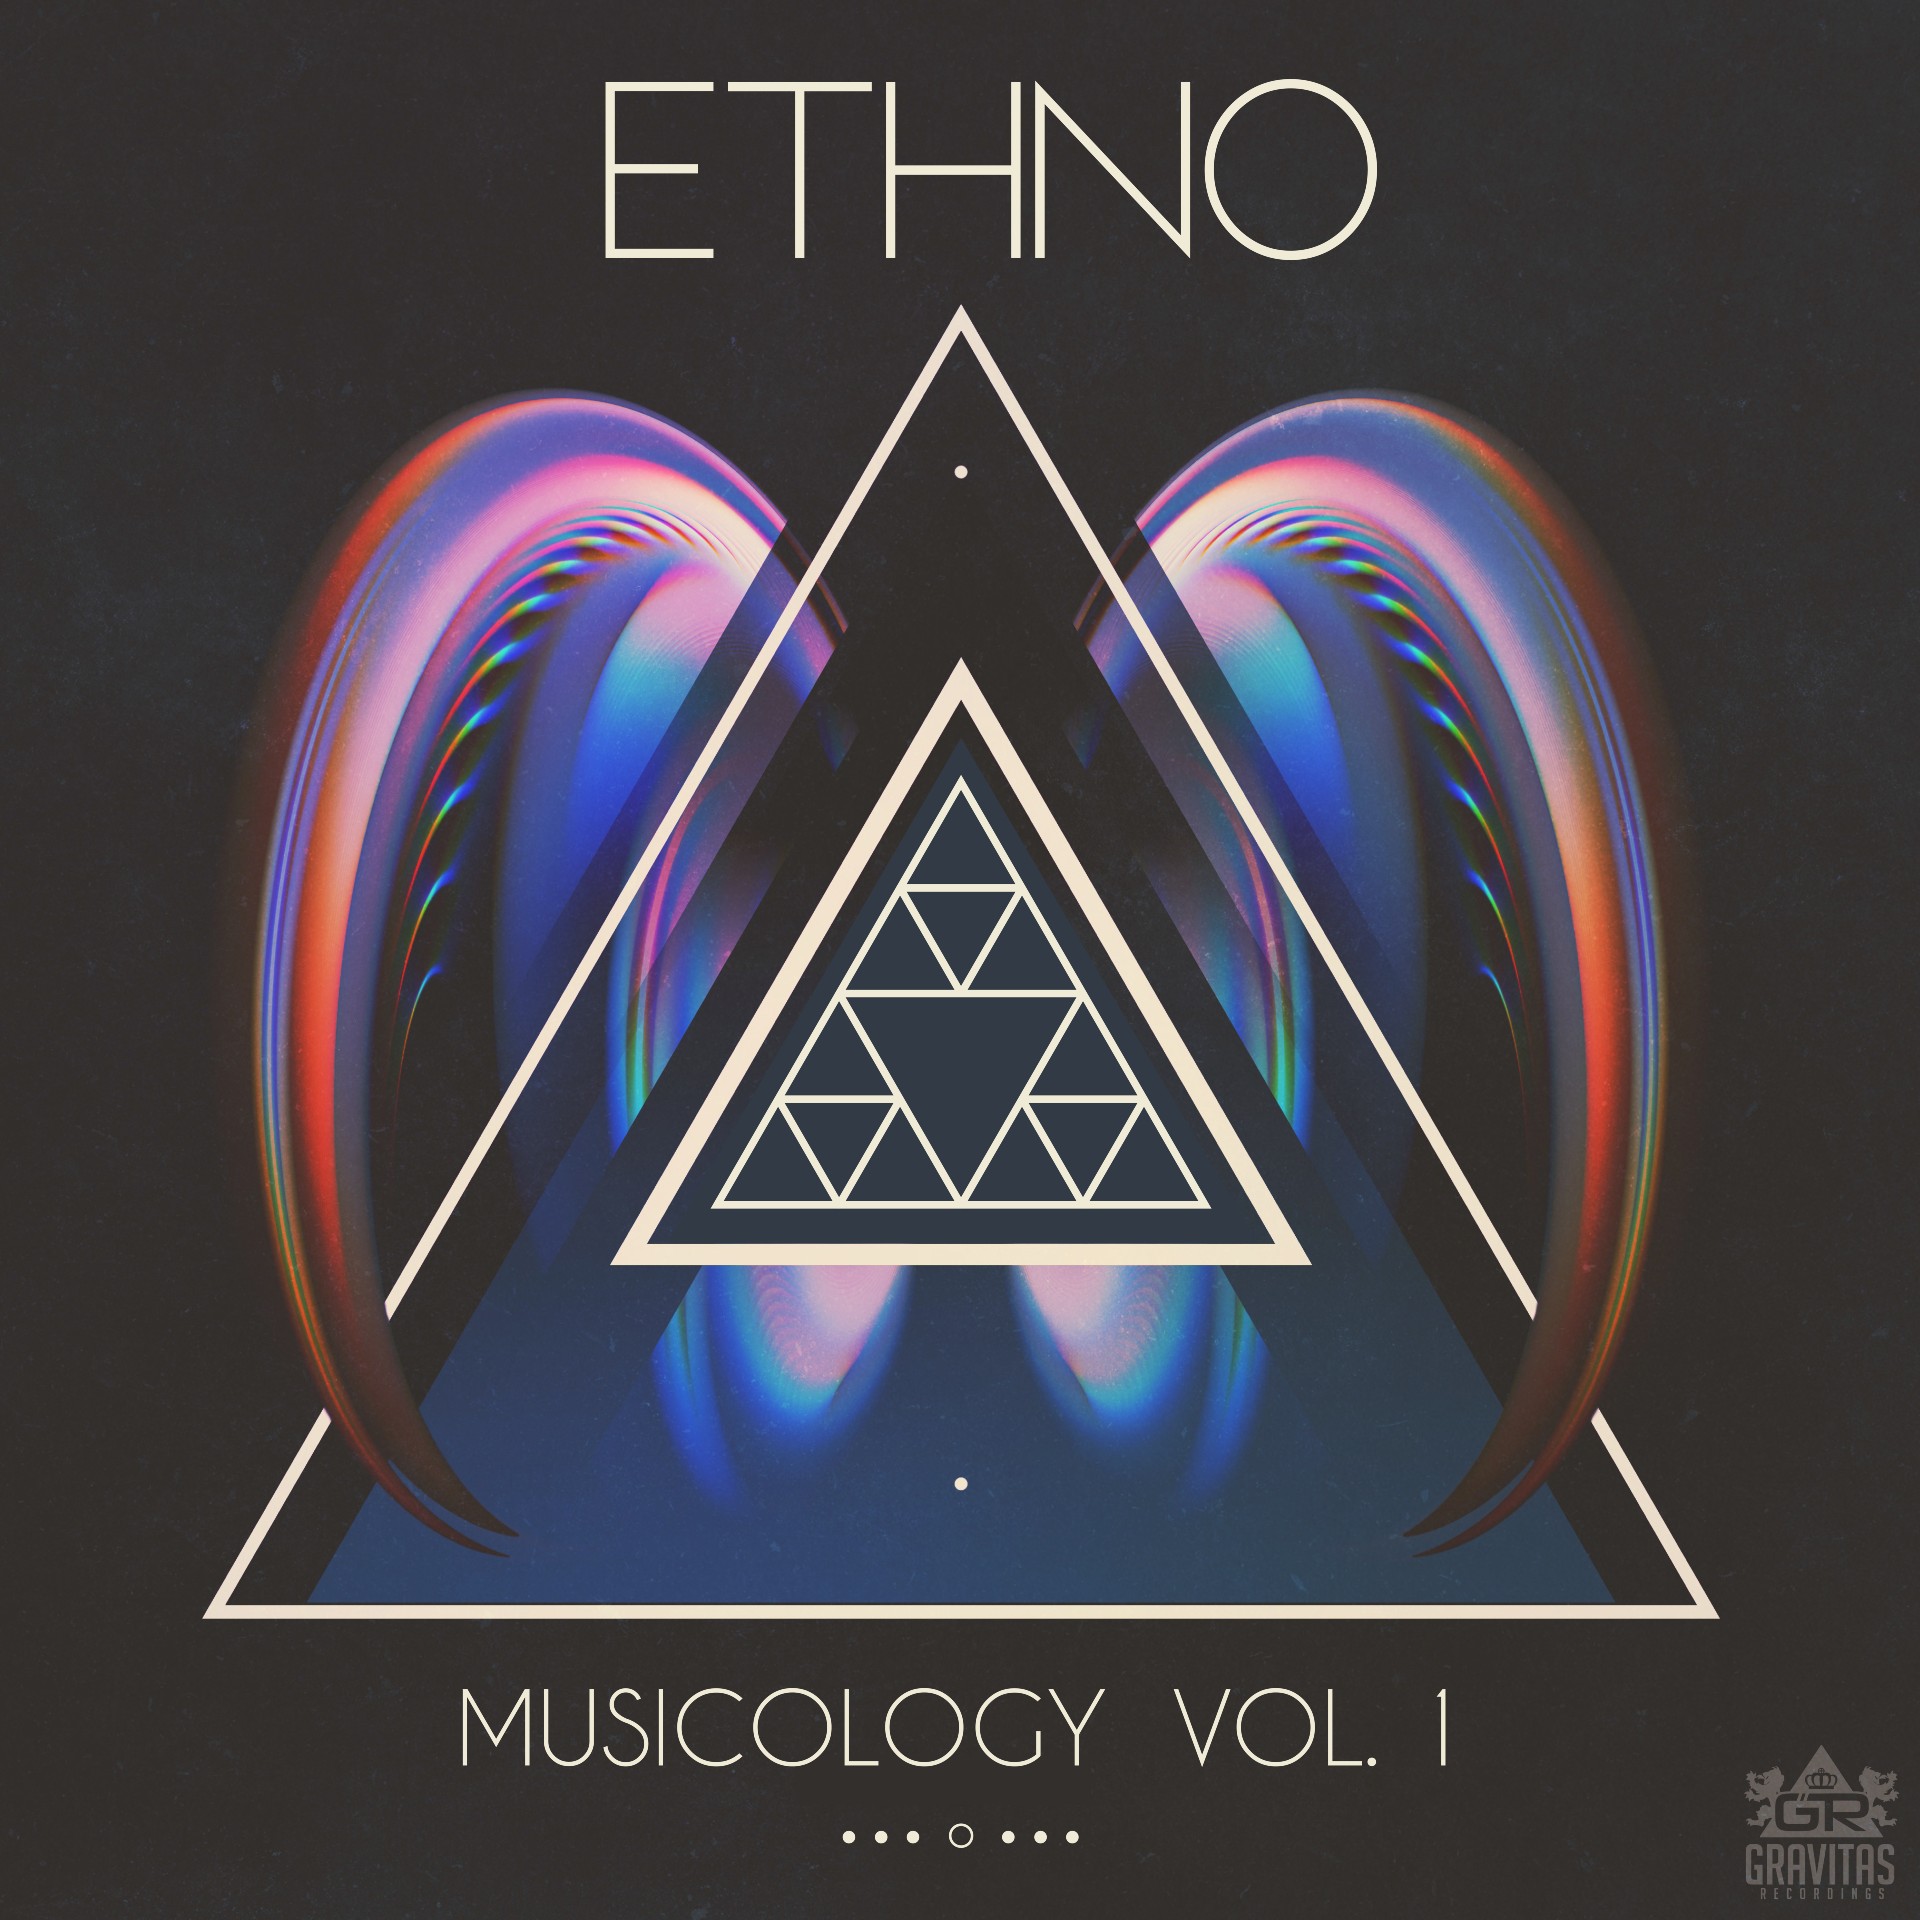 ETHNO ‘Musicology Vol.1’ EP album artwork